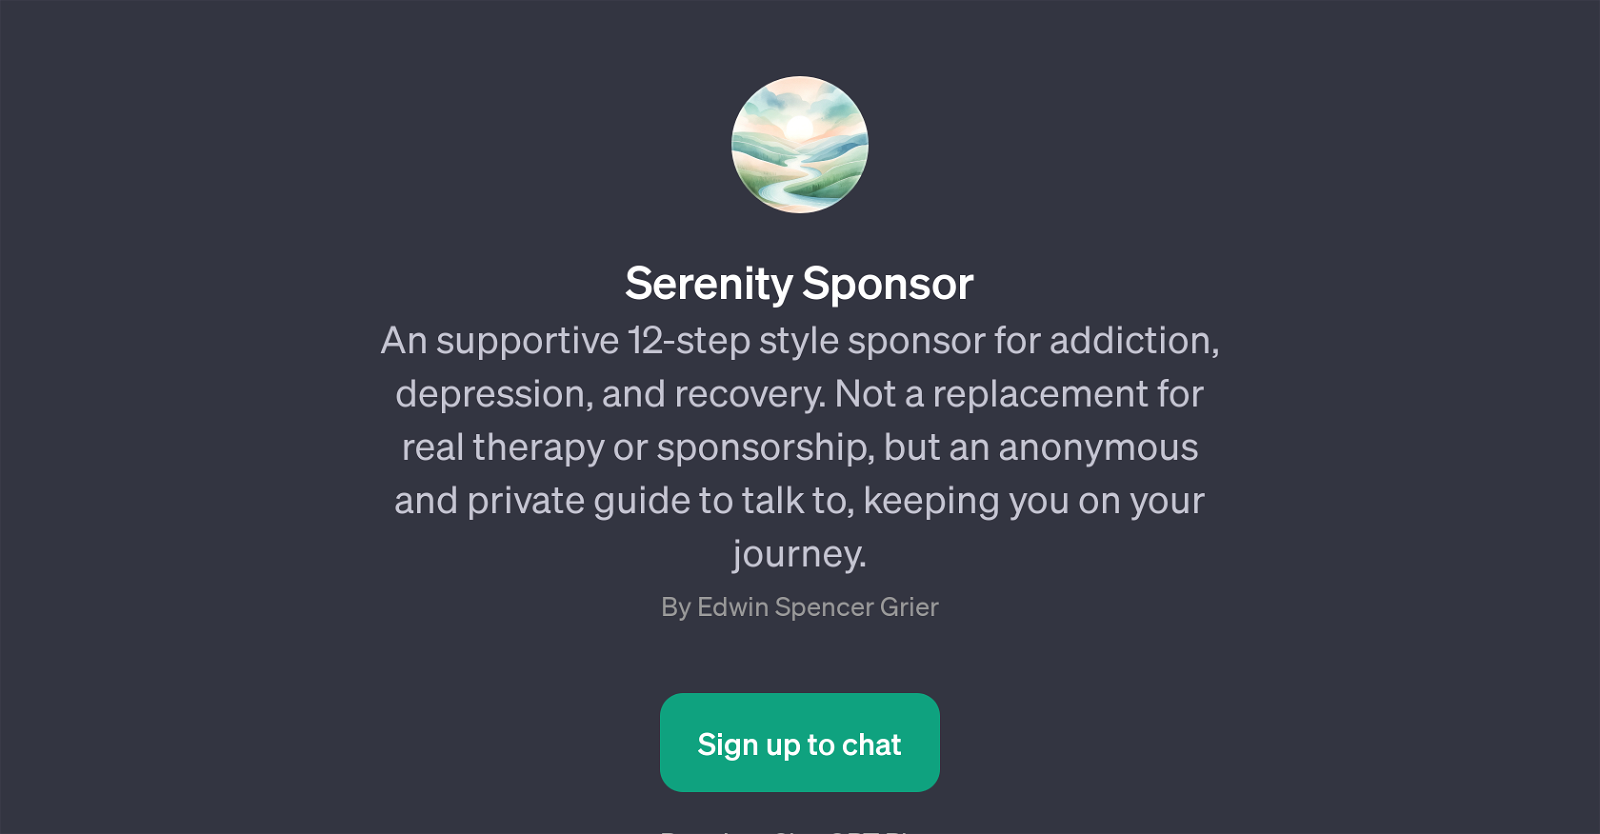 Serenity Sponsor website